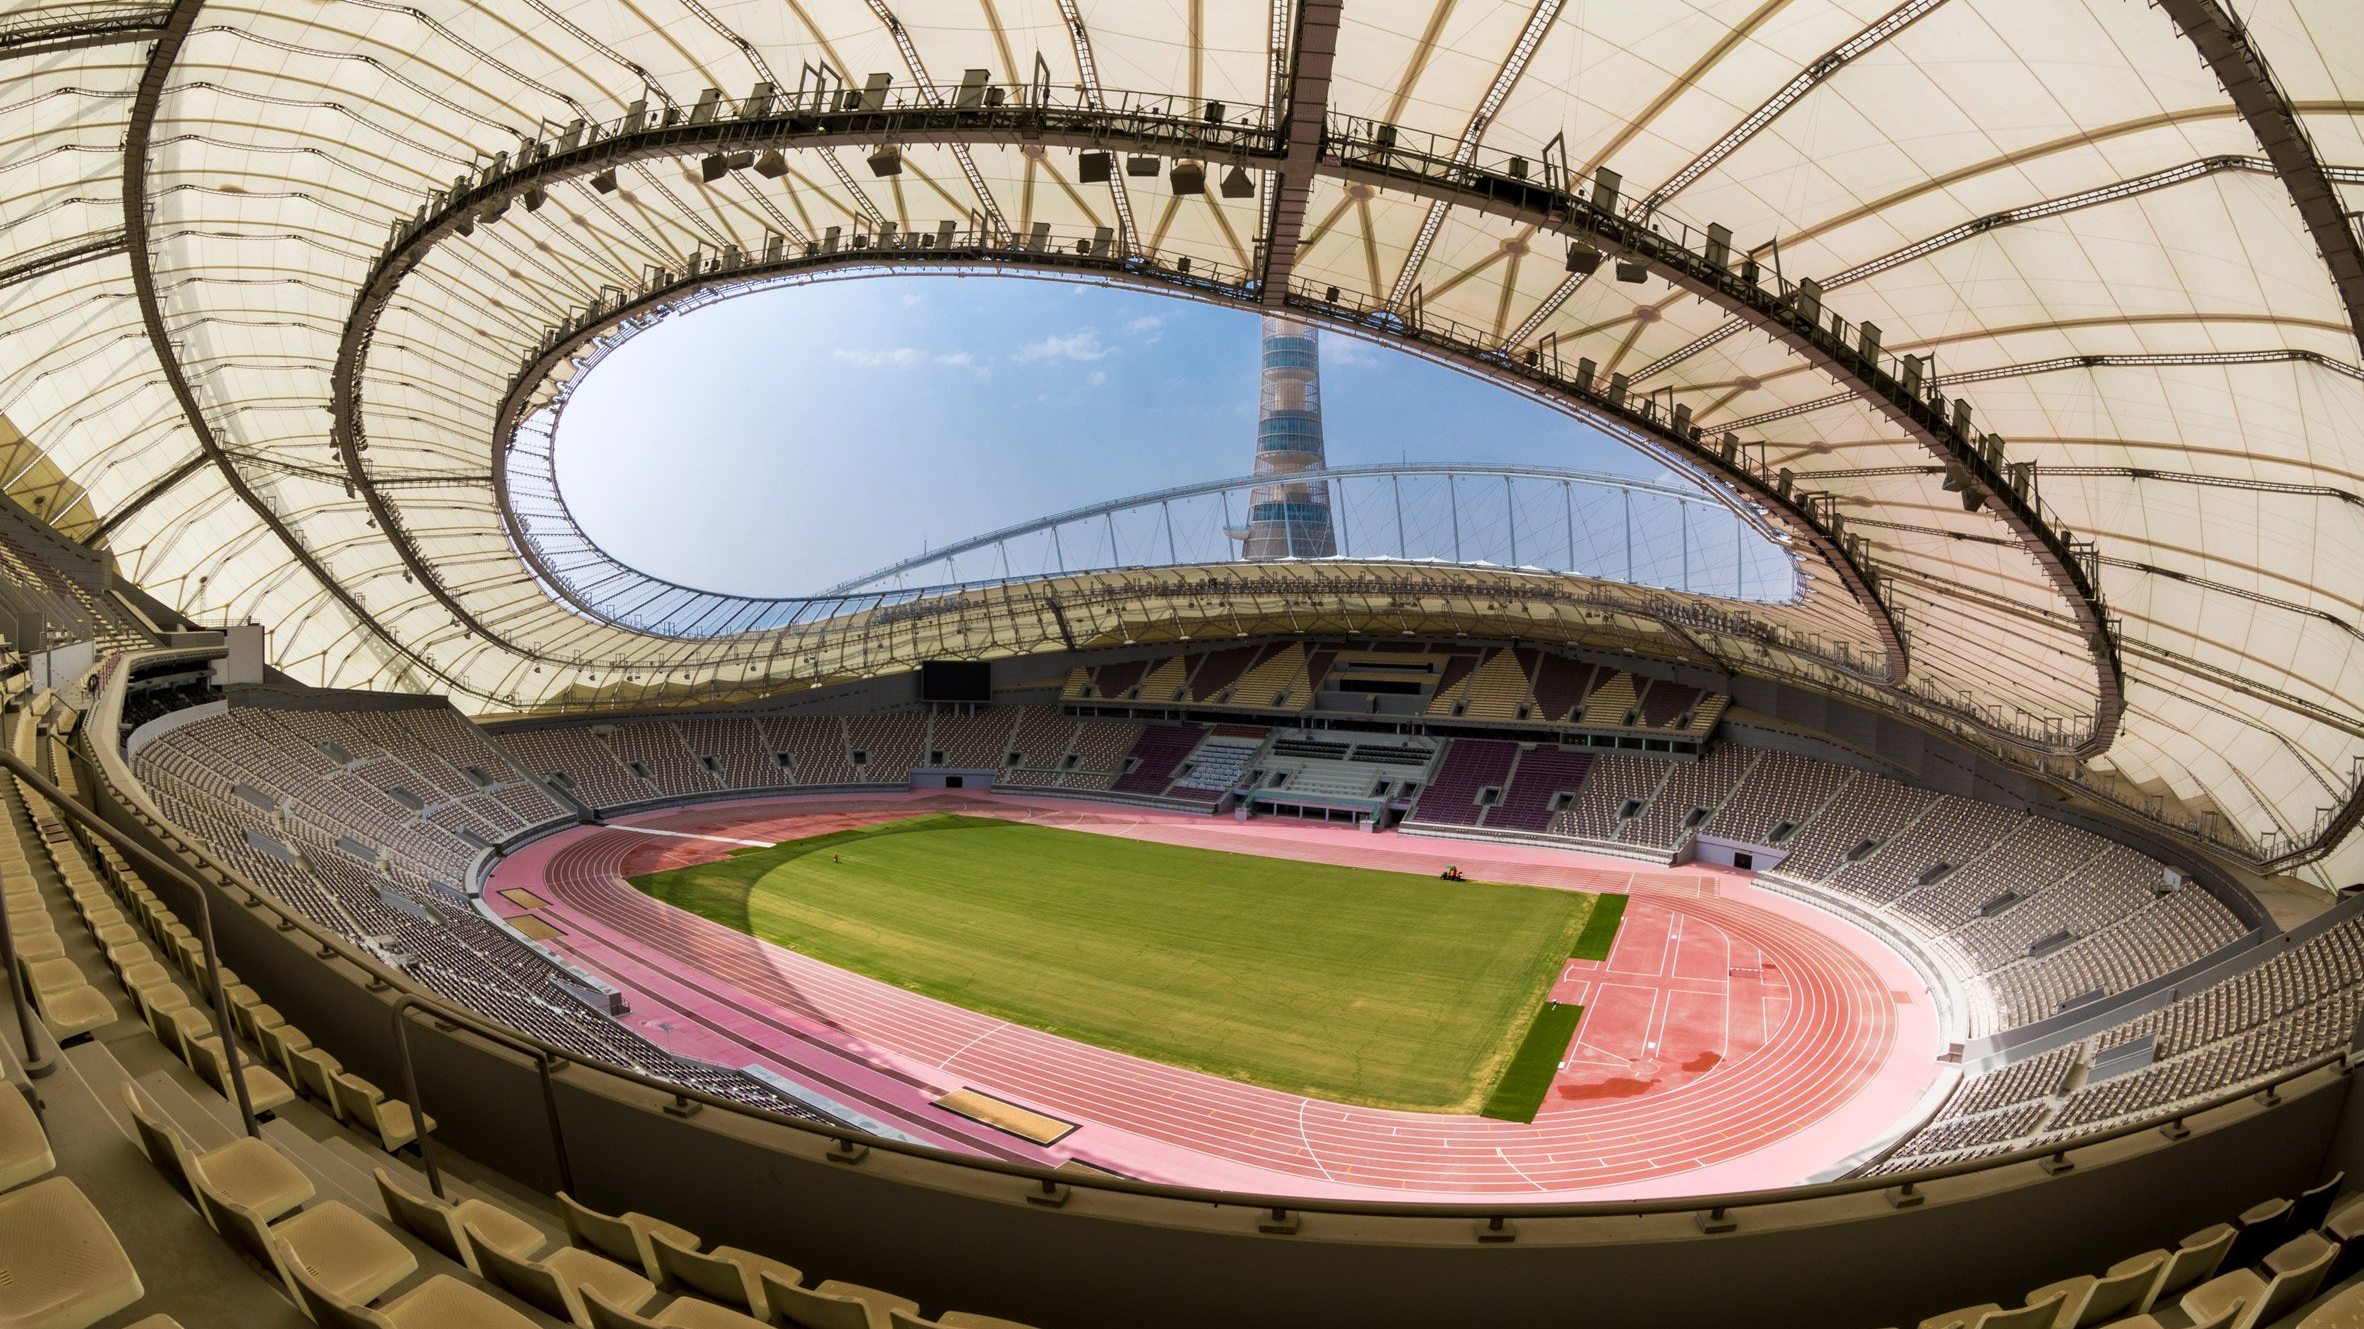 Dezeen Agenda features Qatar's "extensive" World Cup stadium renovation